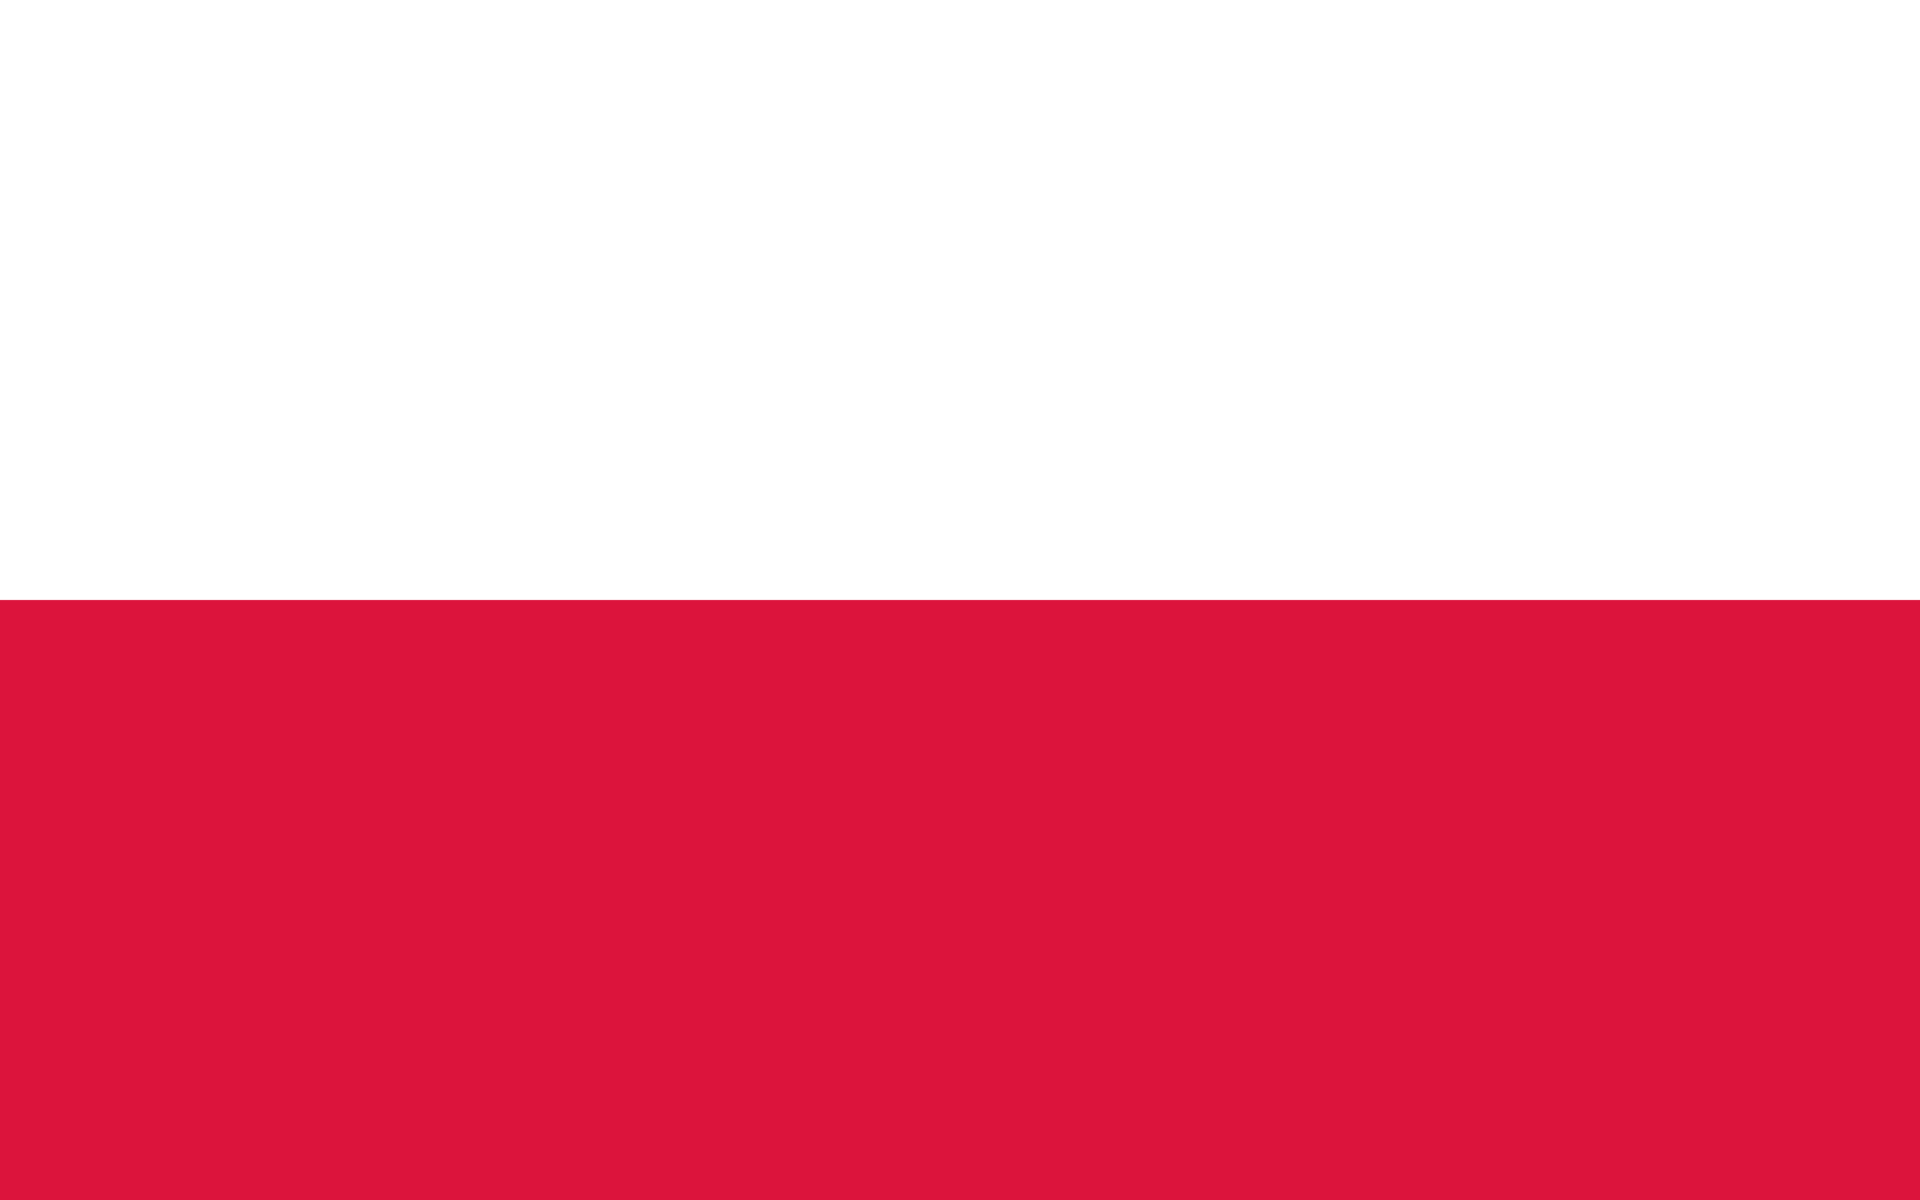 Poland flag Harrison Flagpoles Quality Digital Print Handsewn Ecoflags